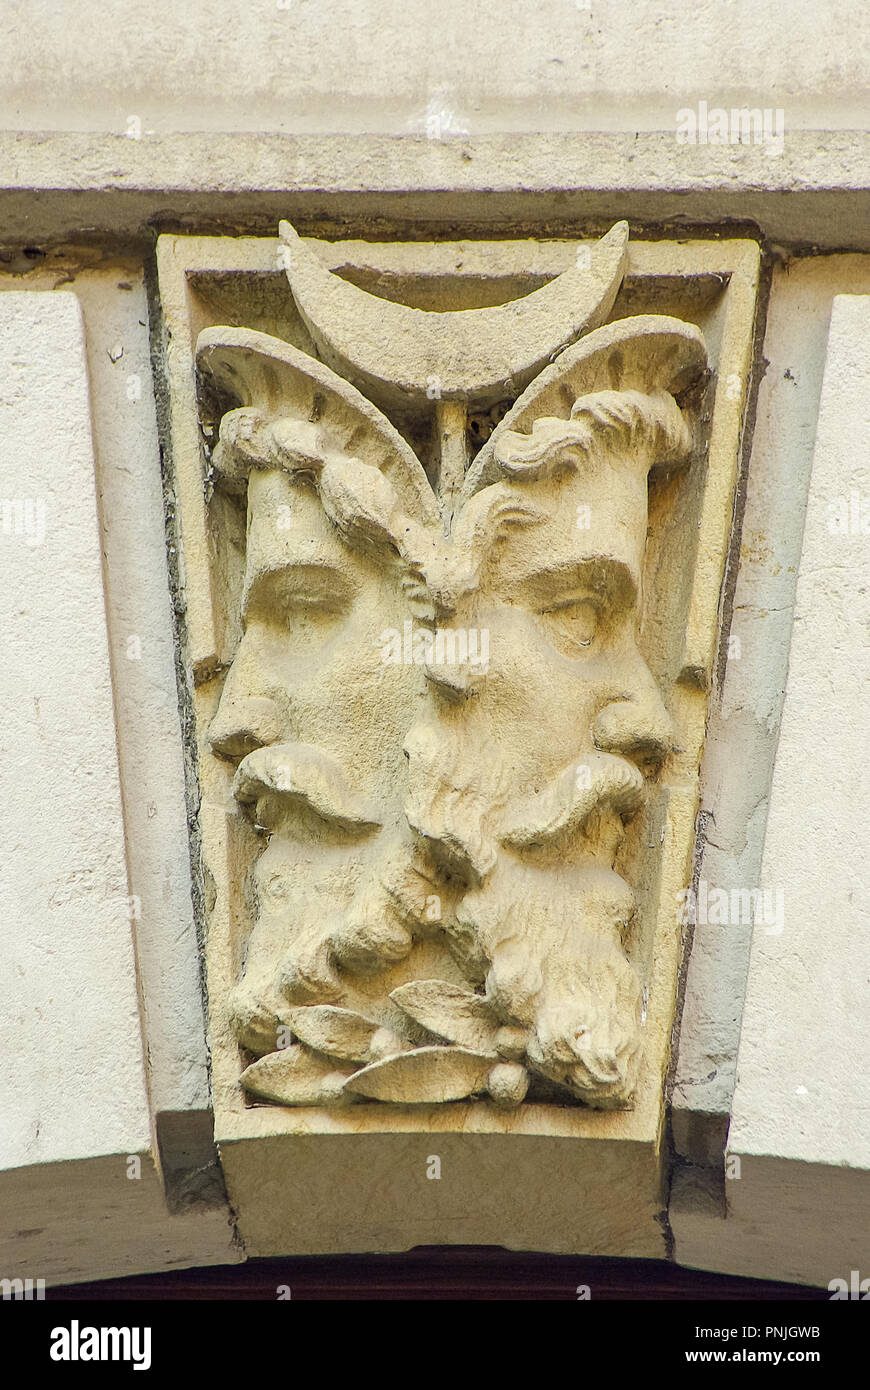 Double face, Janus head as capstone on a doorway arch, Koenigstein, Saxony, Germany. Stock Photo